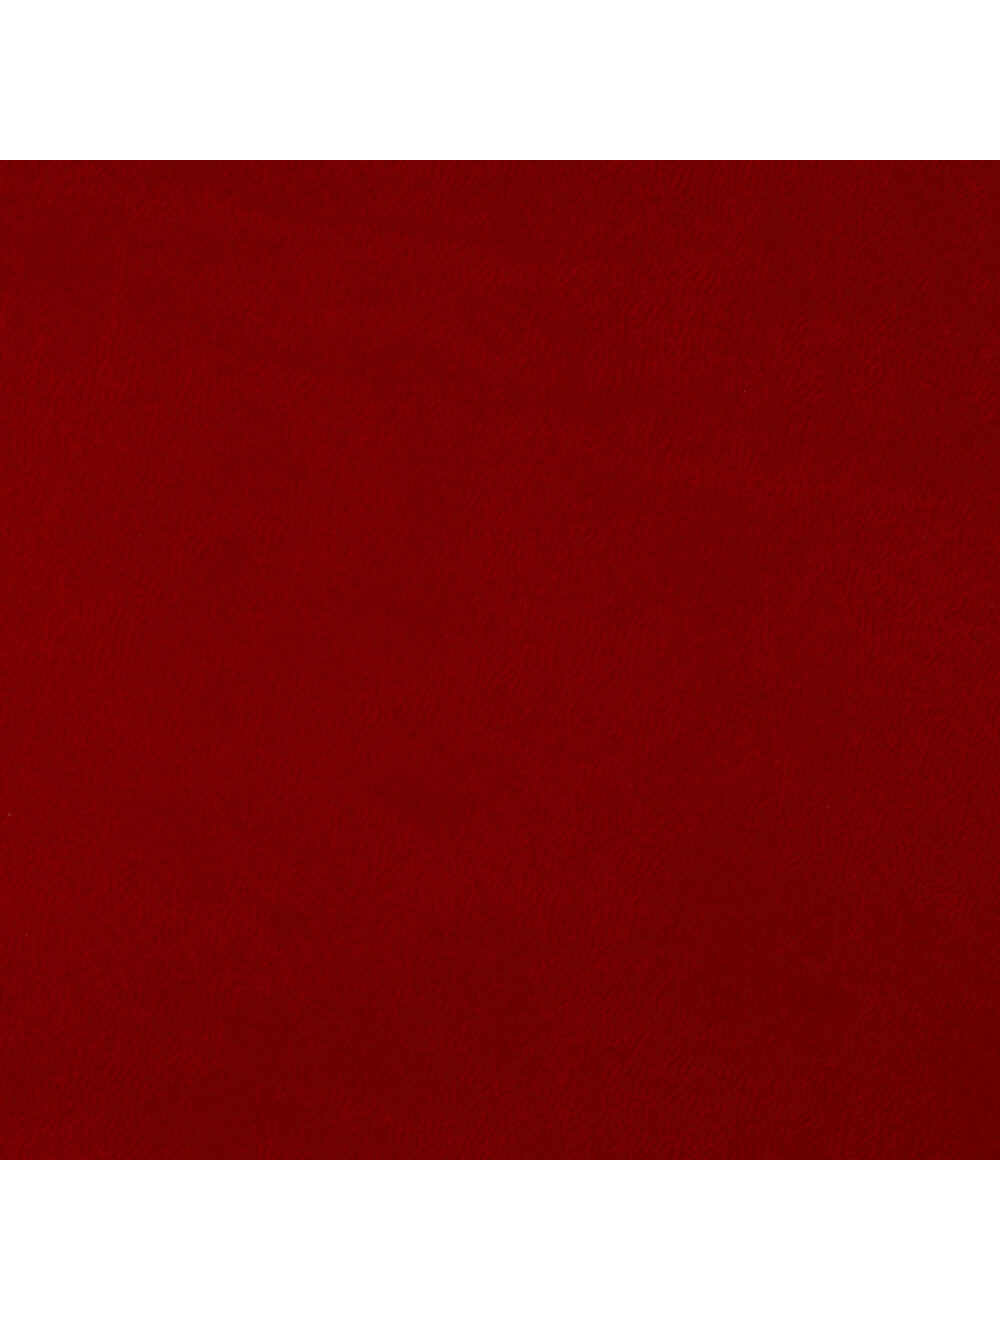 Swatch di materiale rosso Roma Berry (7968)